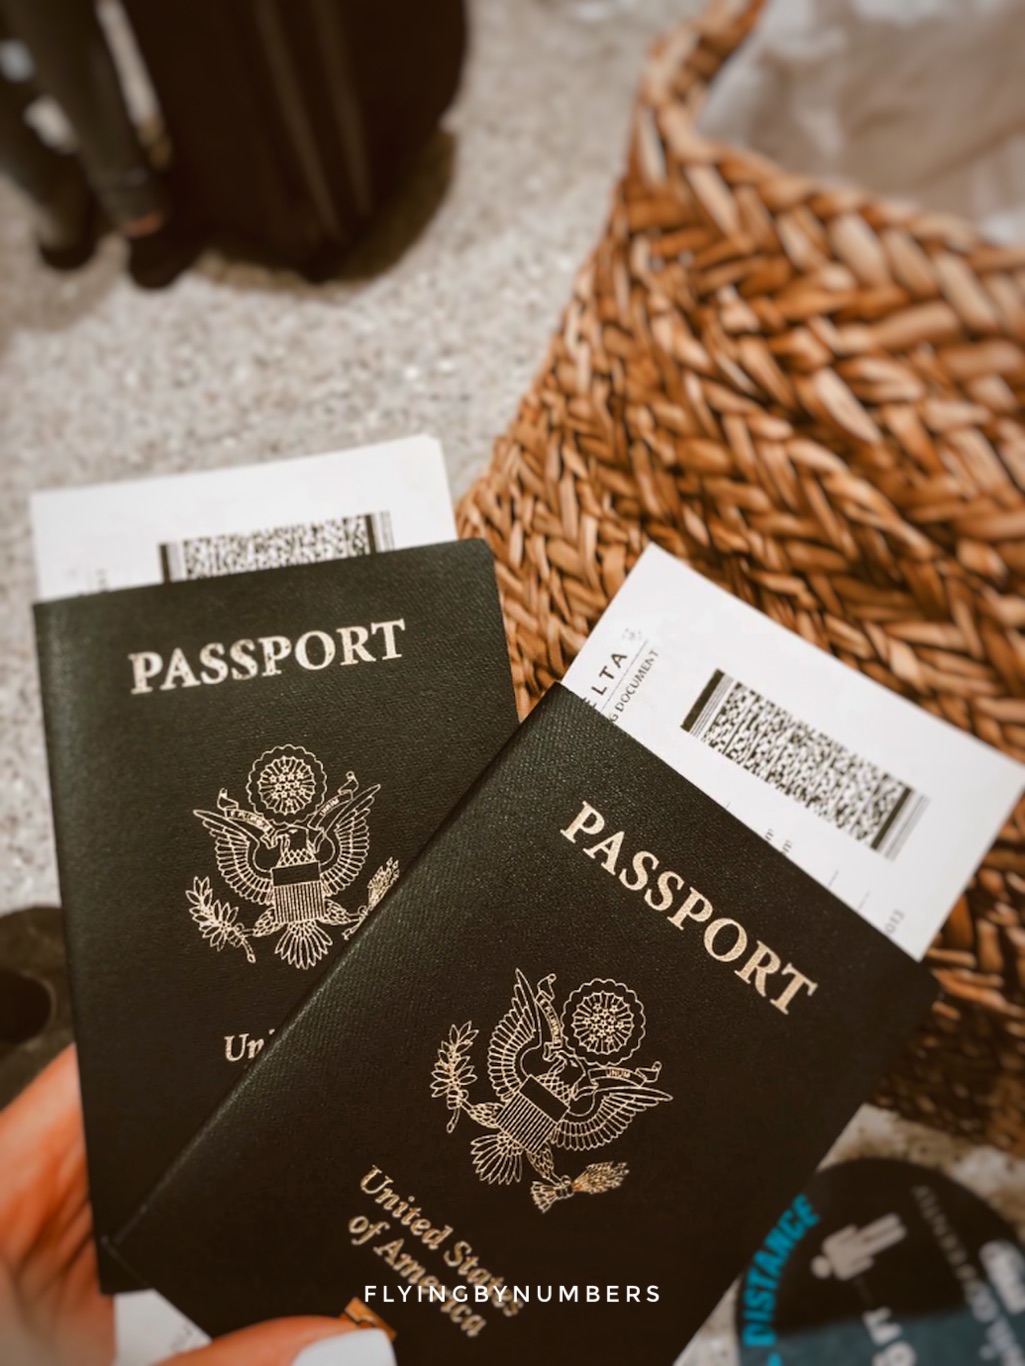 Two passports